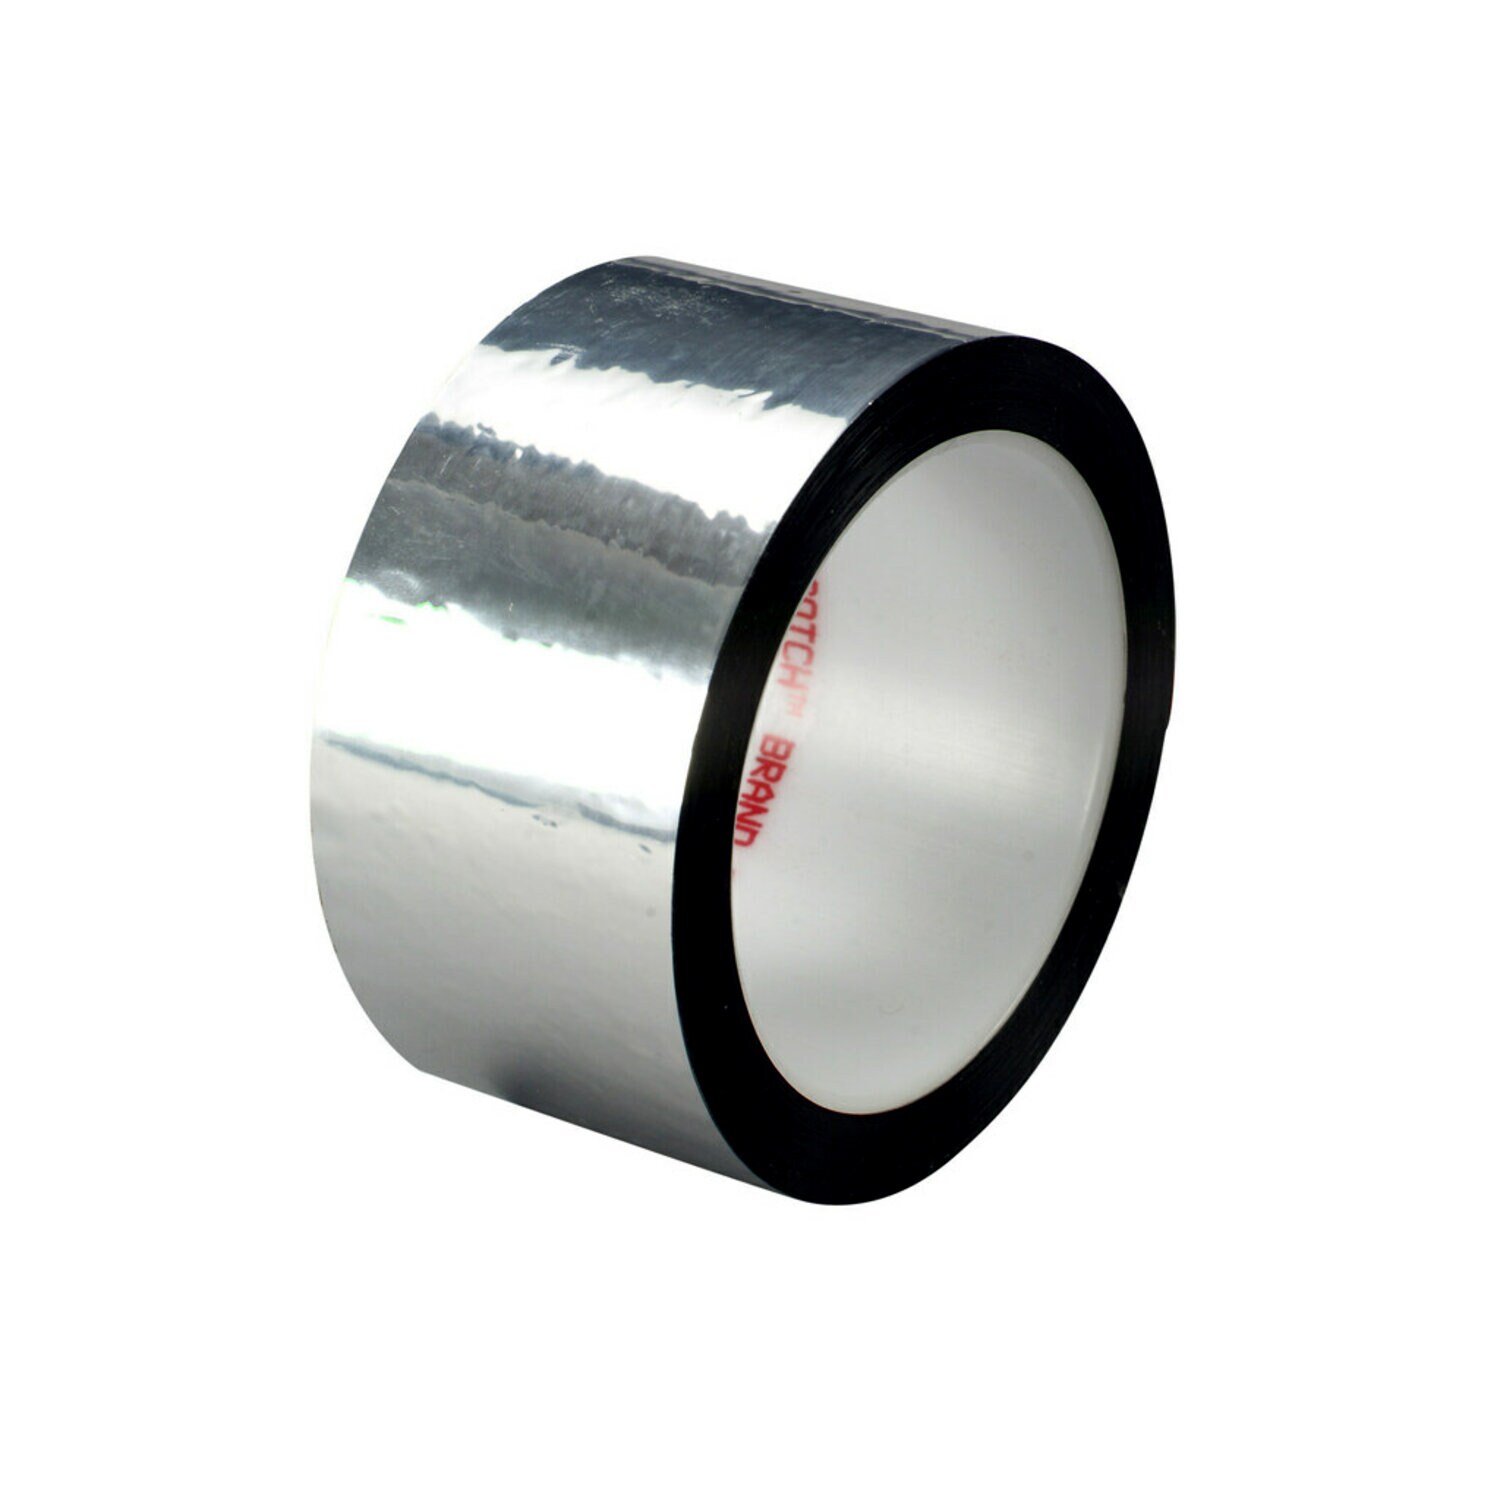  3M 420 Dark Silver Lead Foil Tape - 0.5 in. x 15 ft